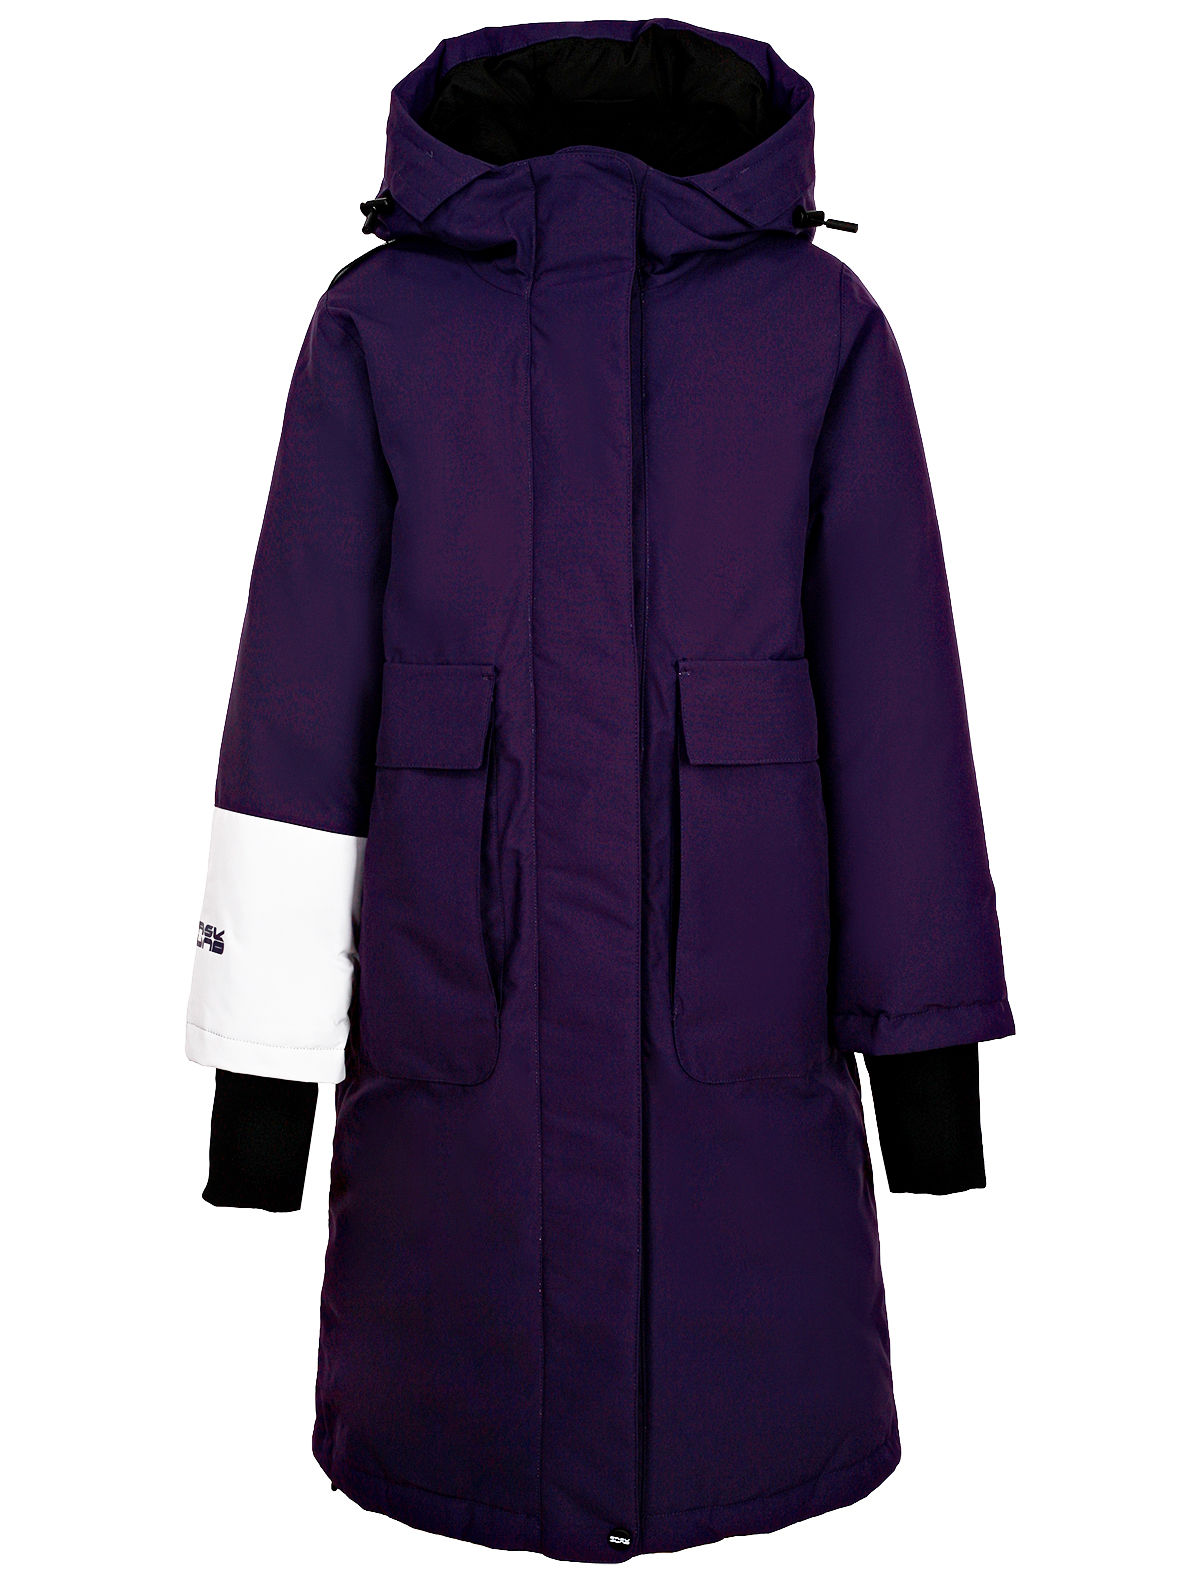 Пальто BASK 2615120, цвет фиолетовый, размер 9 1124509383149 - фото 1